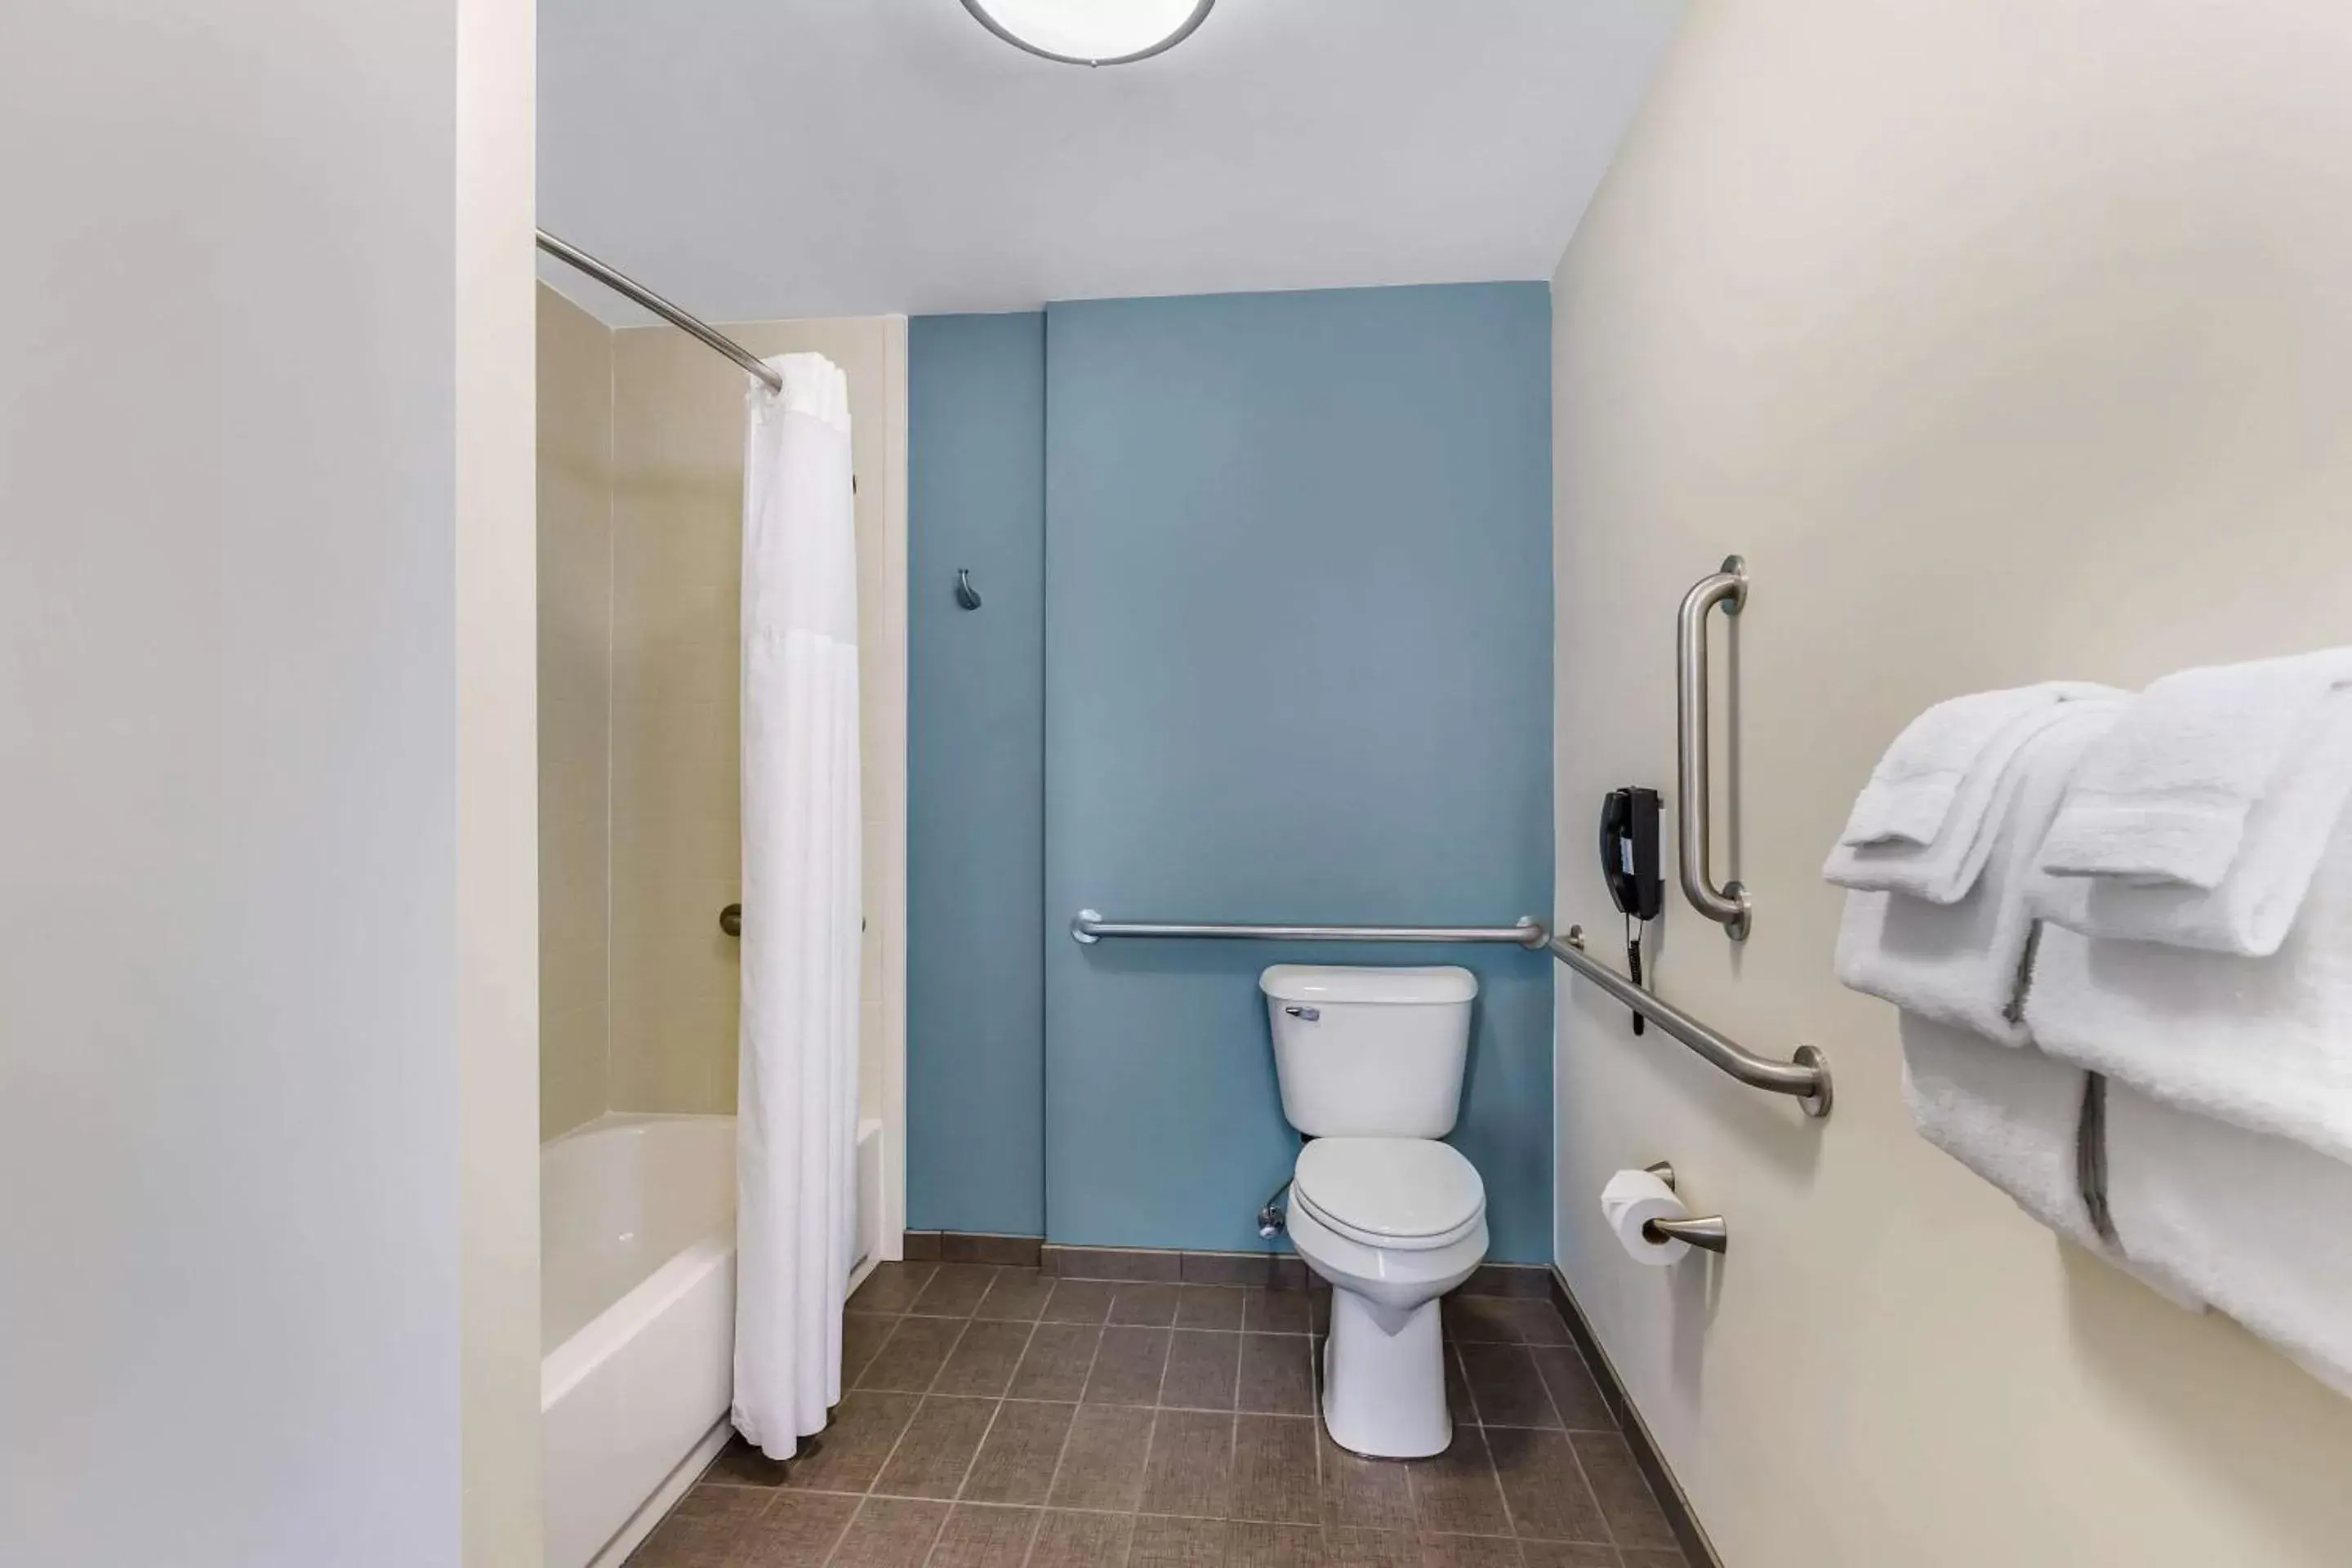 Photo of the whole room, Bathroom in Sleep Inn & Suites Ames near ISU Campus